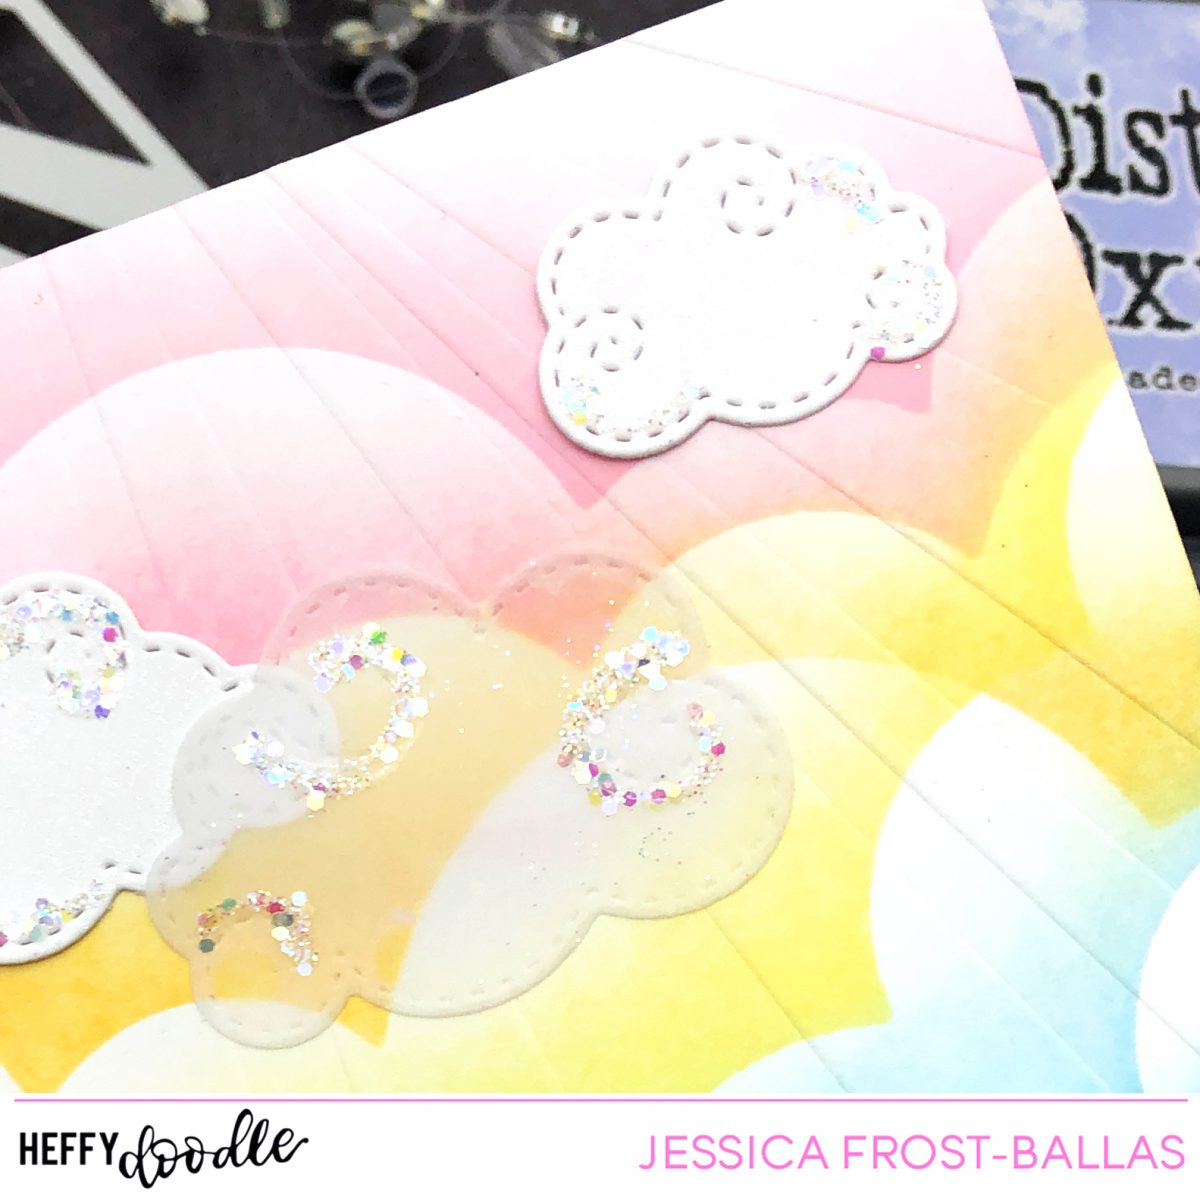 My Little Angel by Jessica Frost-Ballas for Heffy Doodle